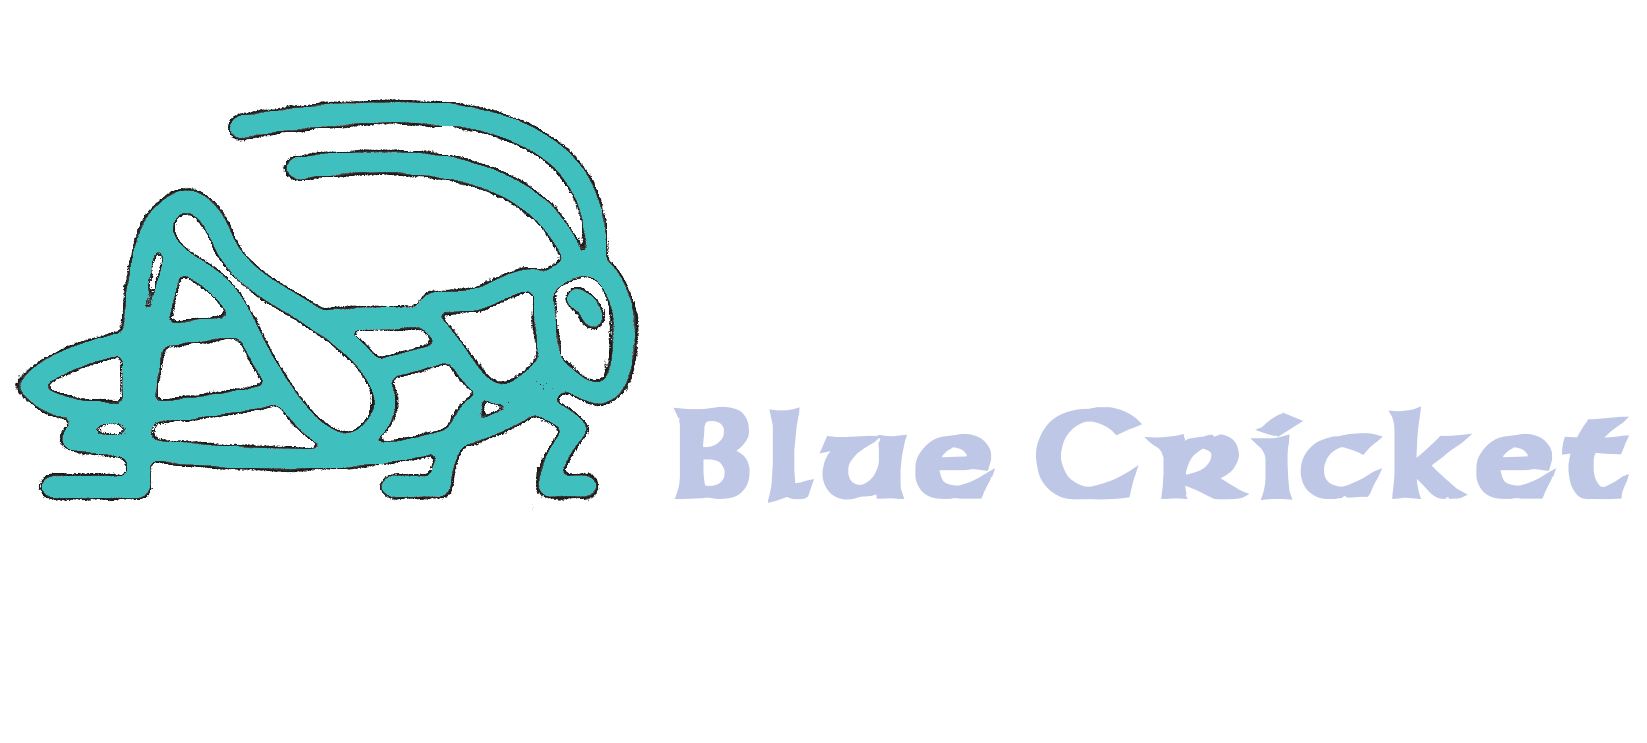 Blue Cricket Website Design